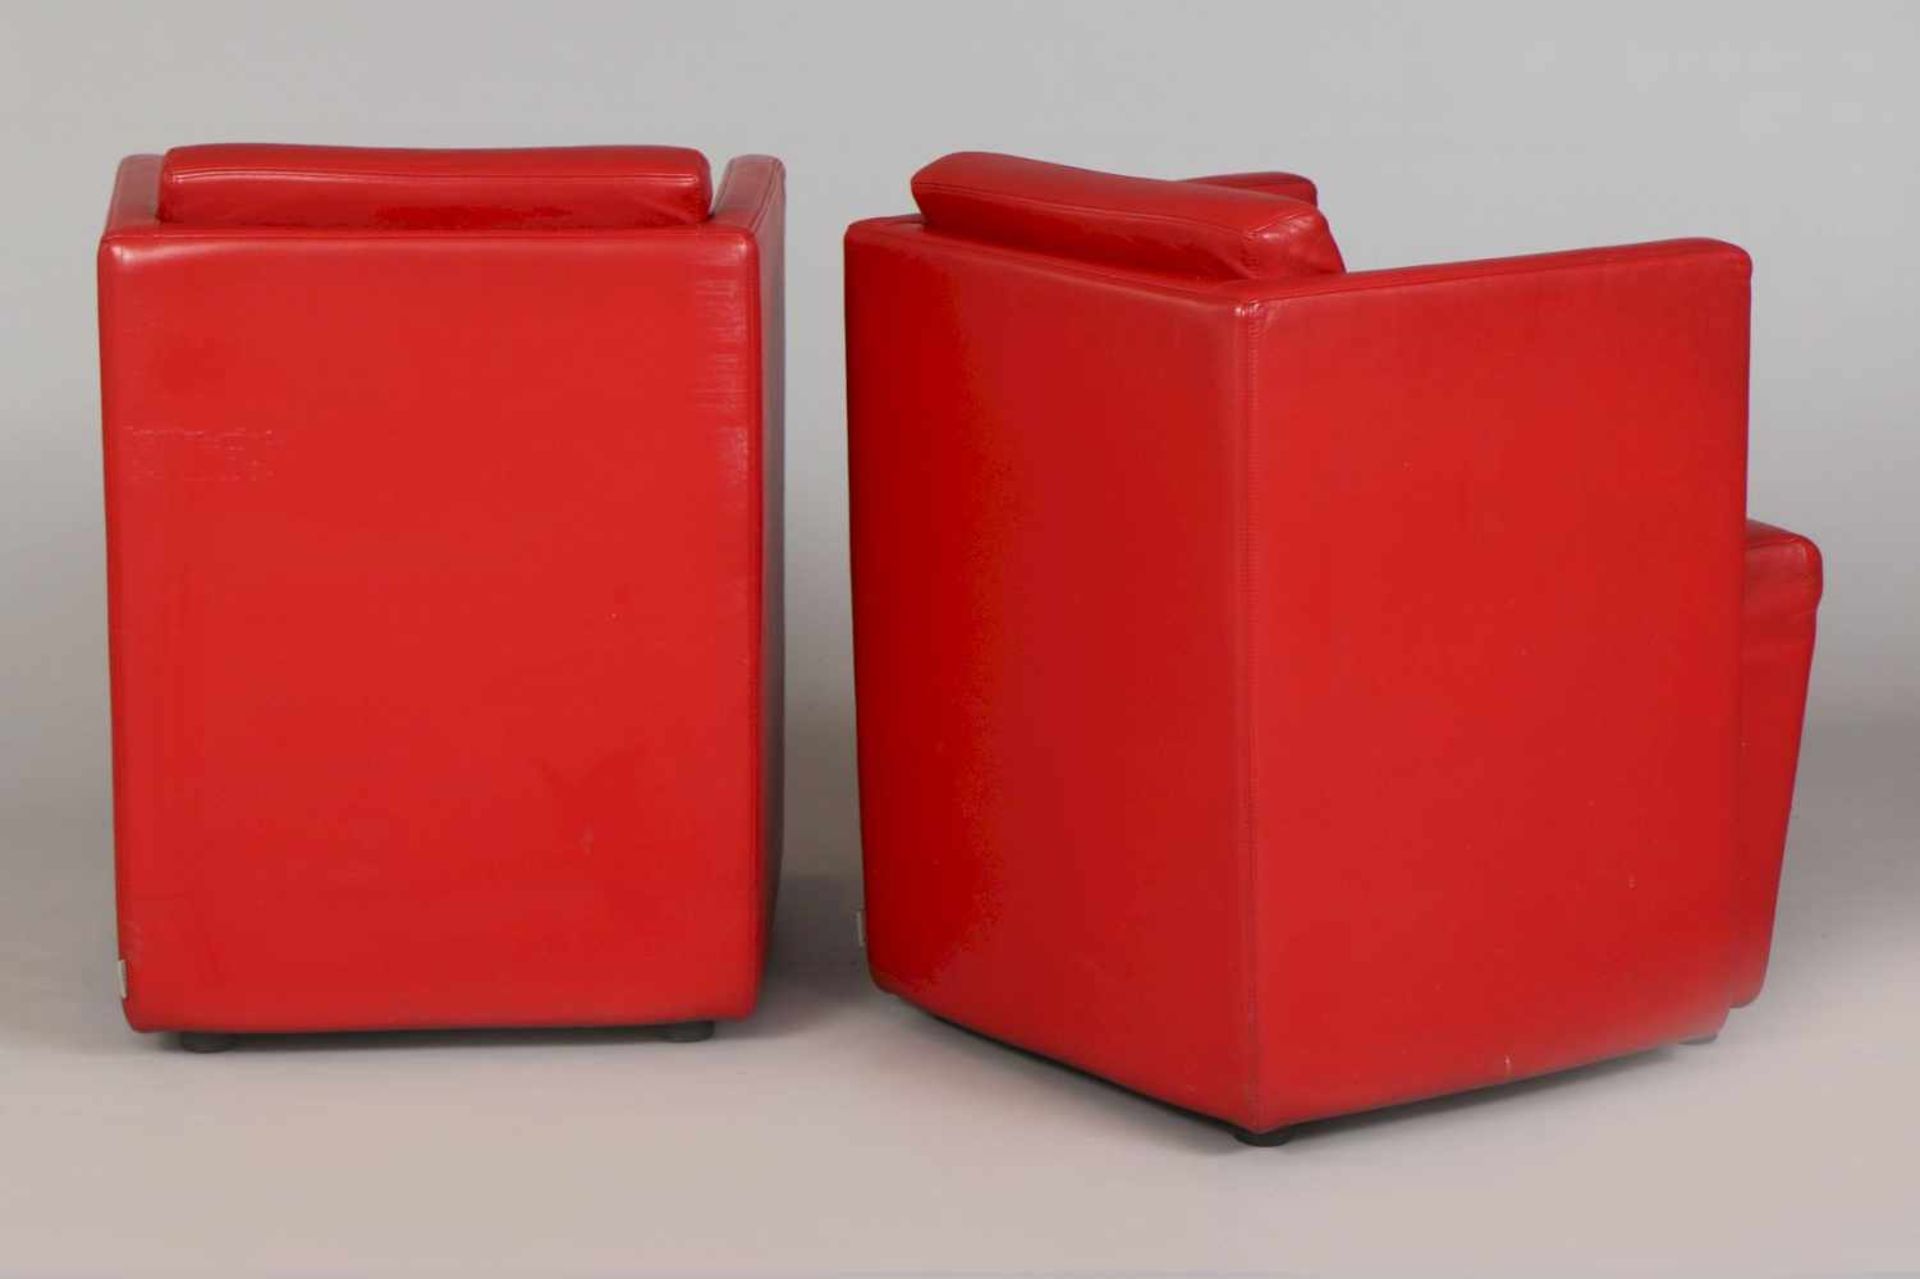 2 WALTER KNOLL Armlehnsessel allseitig gepolstert/rot beledert, strenge, eckige Form im Bauhaus- - Bild 2 aus 4